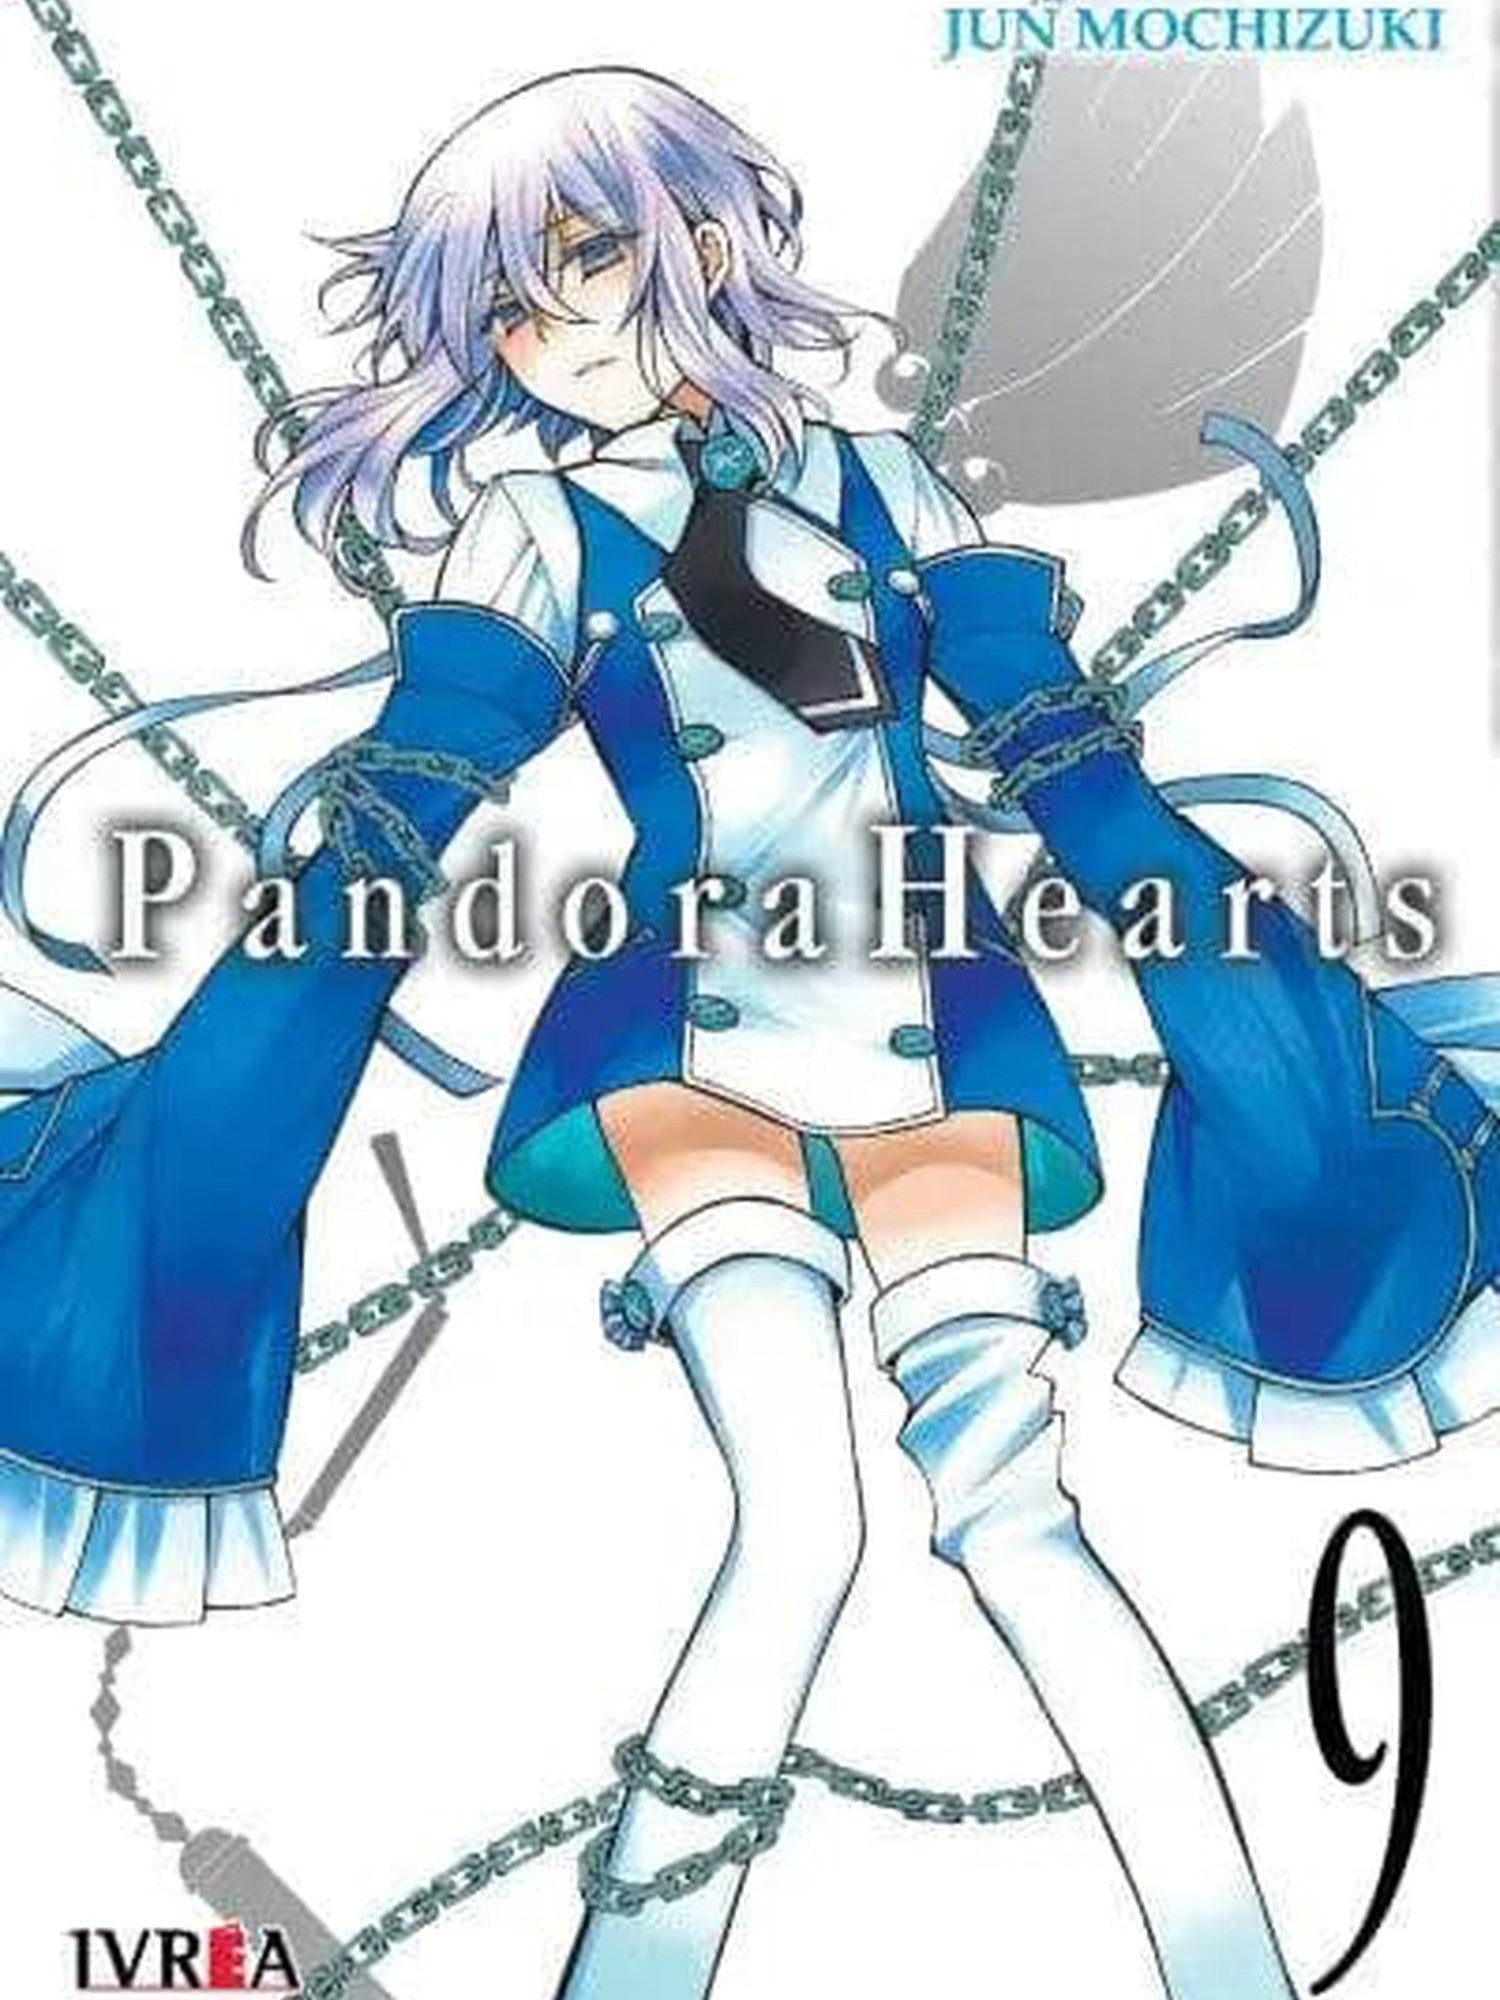 Pandora Hearts 9